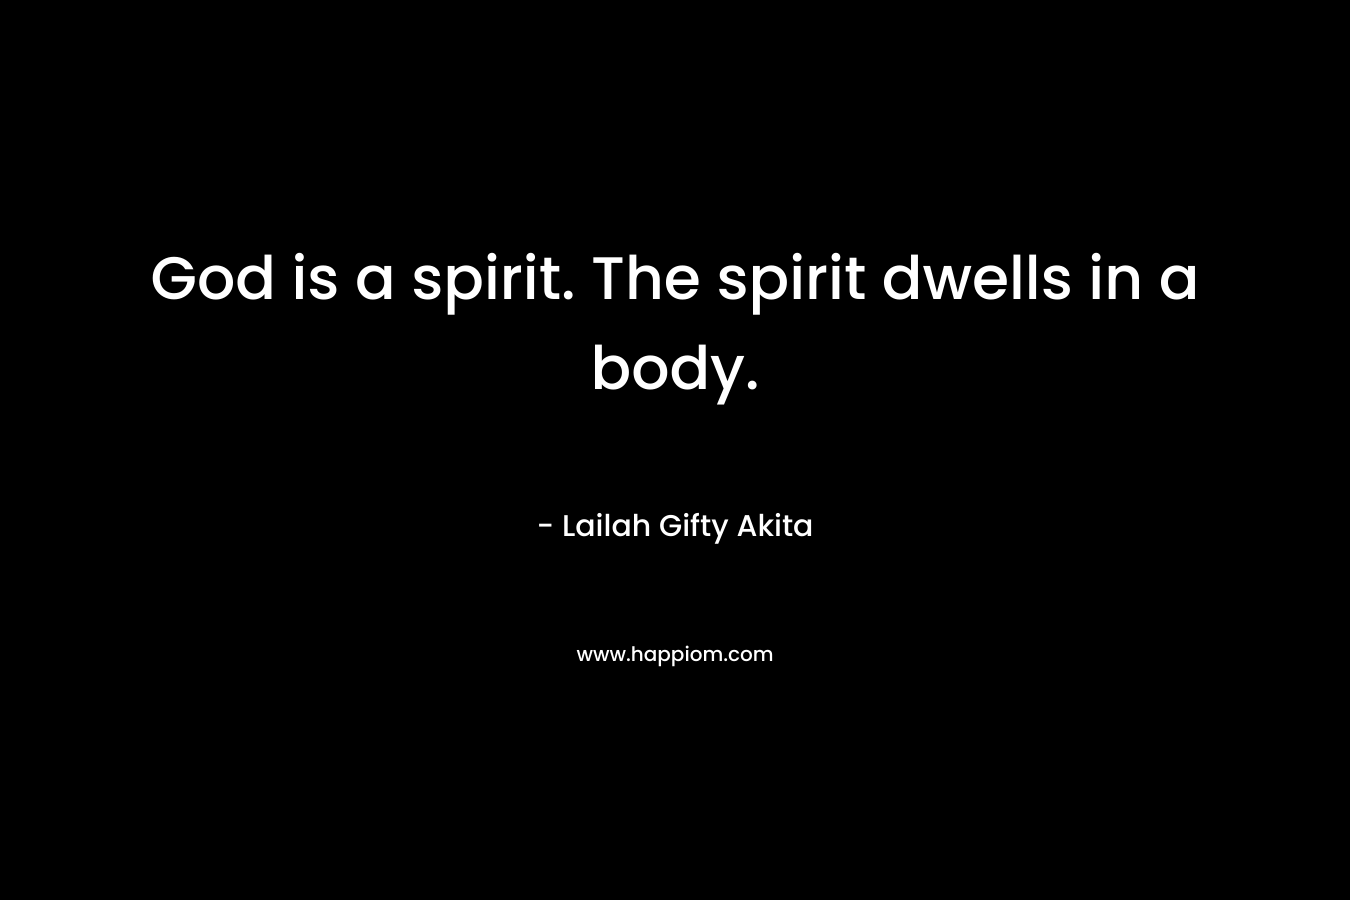 God is a spirit. The spirit dwells in a body.